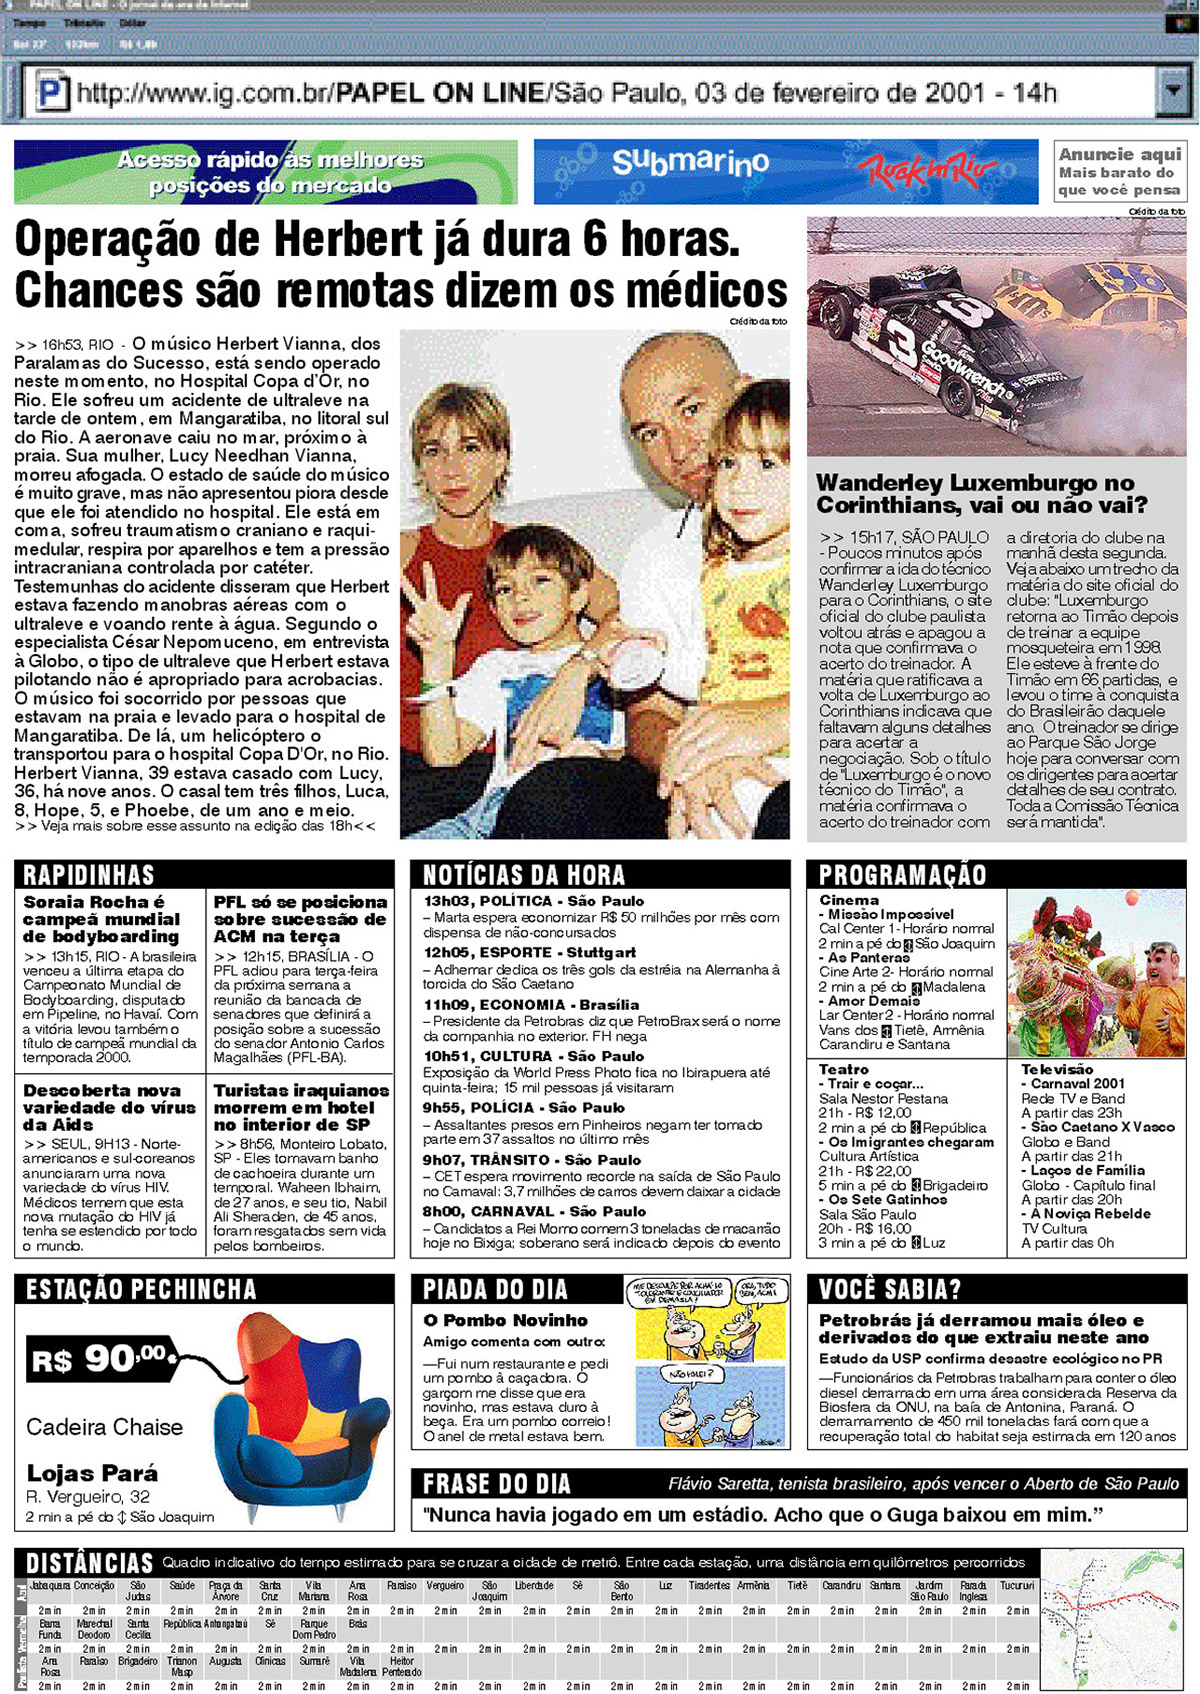 LANCE! grid modulation Jornal Placar R7.com Aennova TV Record BBoxSPbr try Folha de S.Paulo